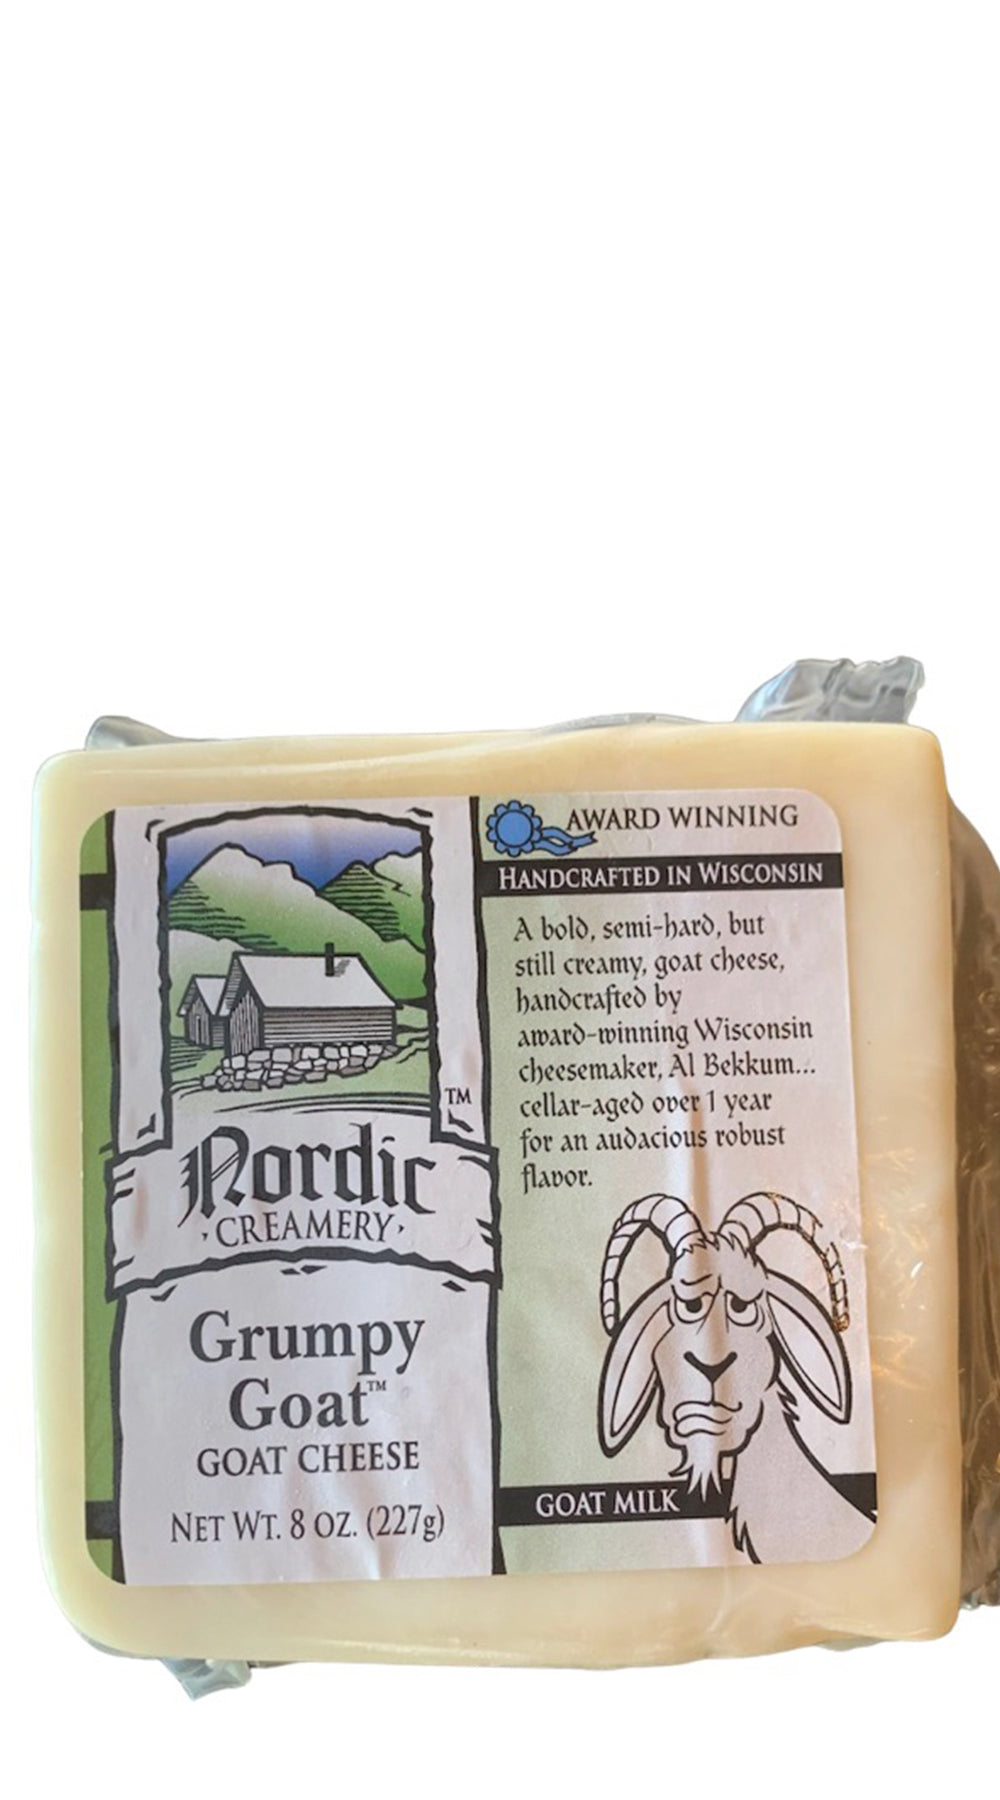 Nordic Creamery Grumpy Goat Cheese